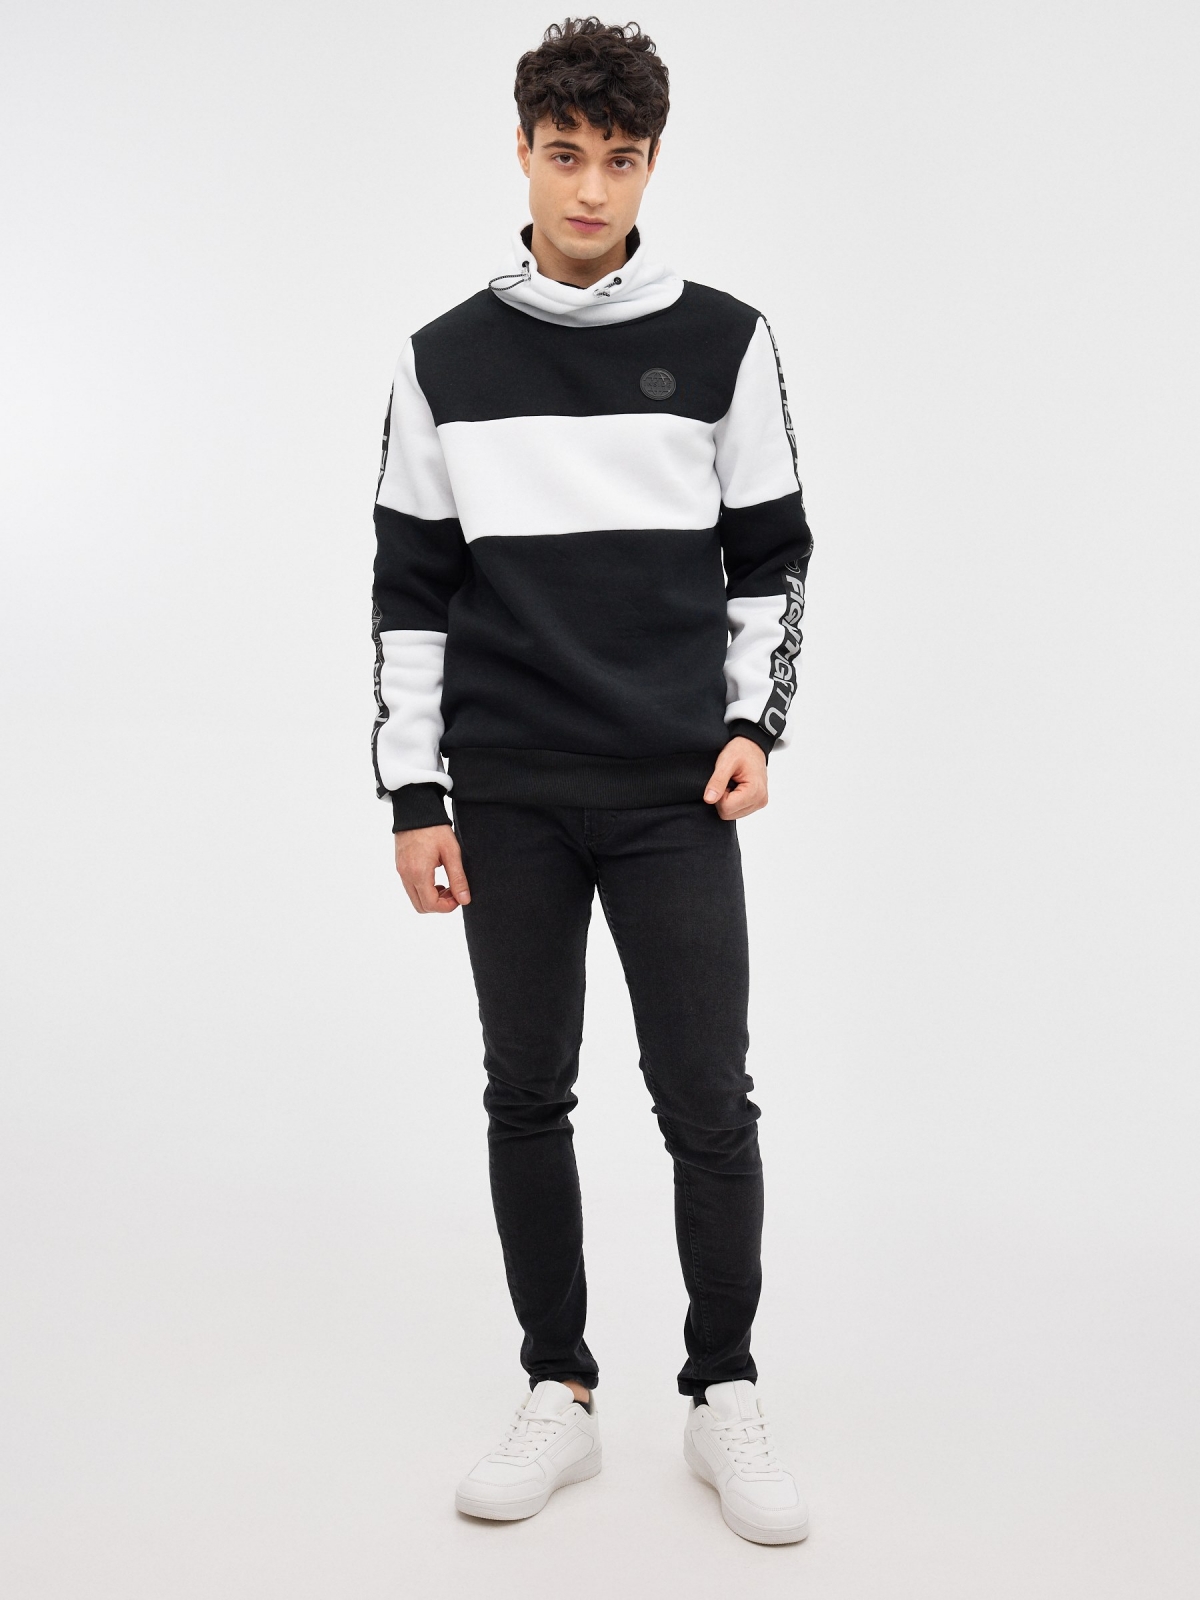 Sweatshirt with wrap-around collar black front view